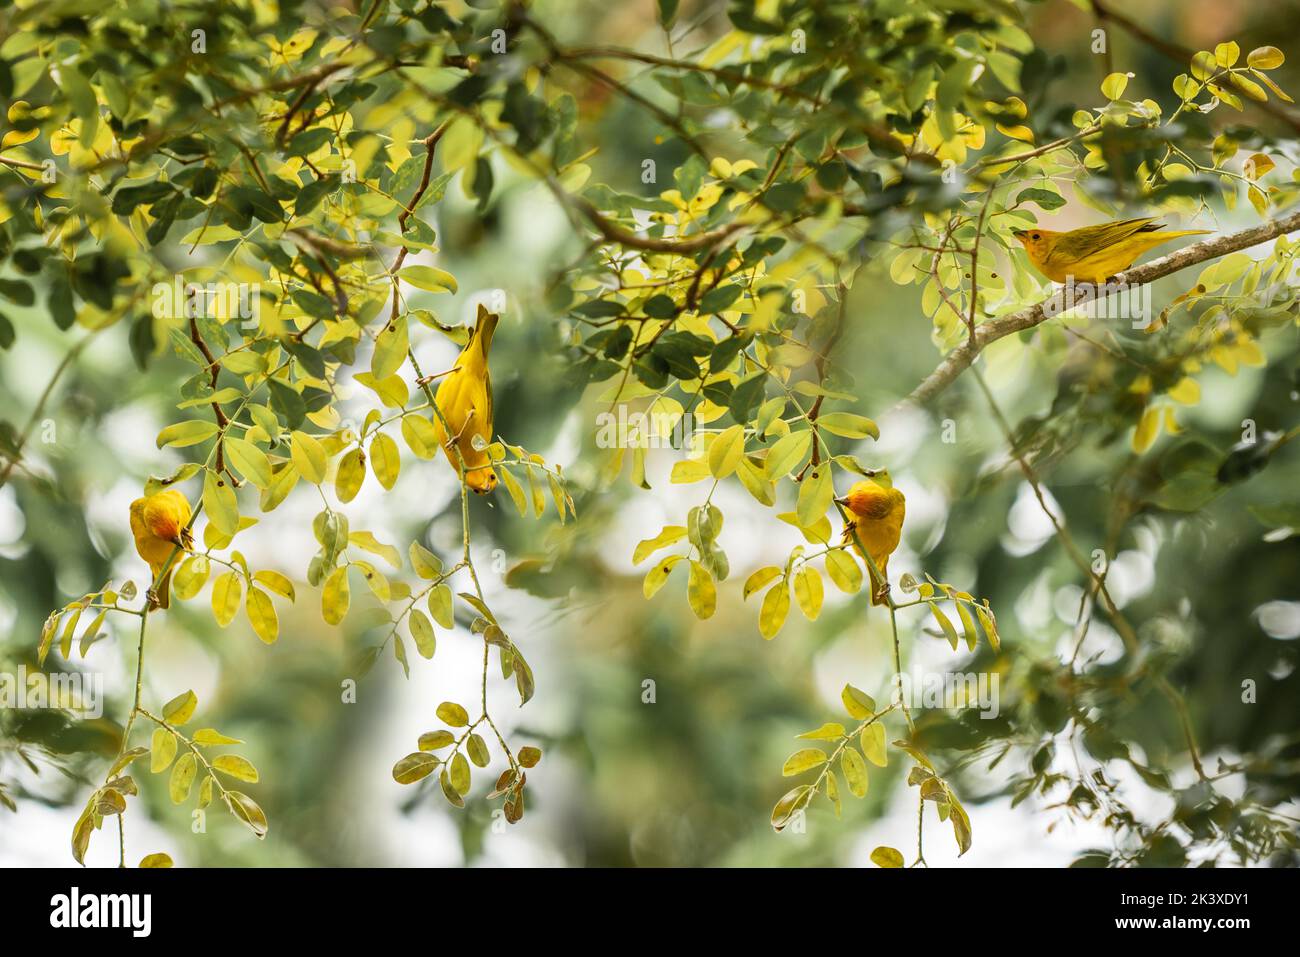 Sicalis flaveola, Saffron Finch, yellow birds on green leafy branches in Minas Gerais, Brazil. Stock Photo